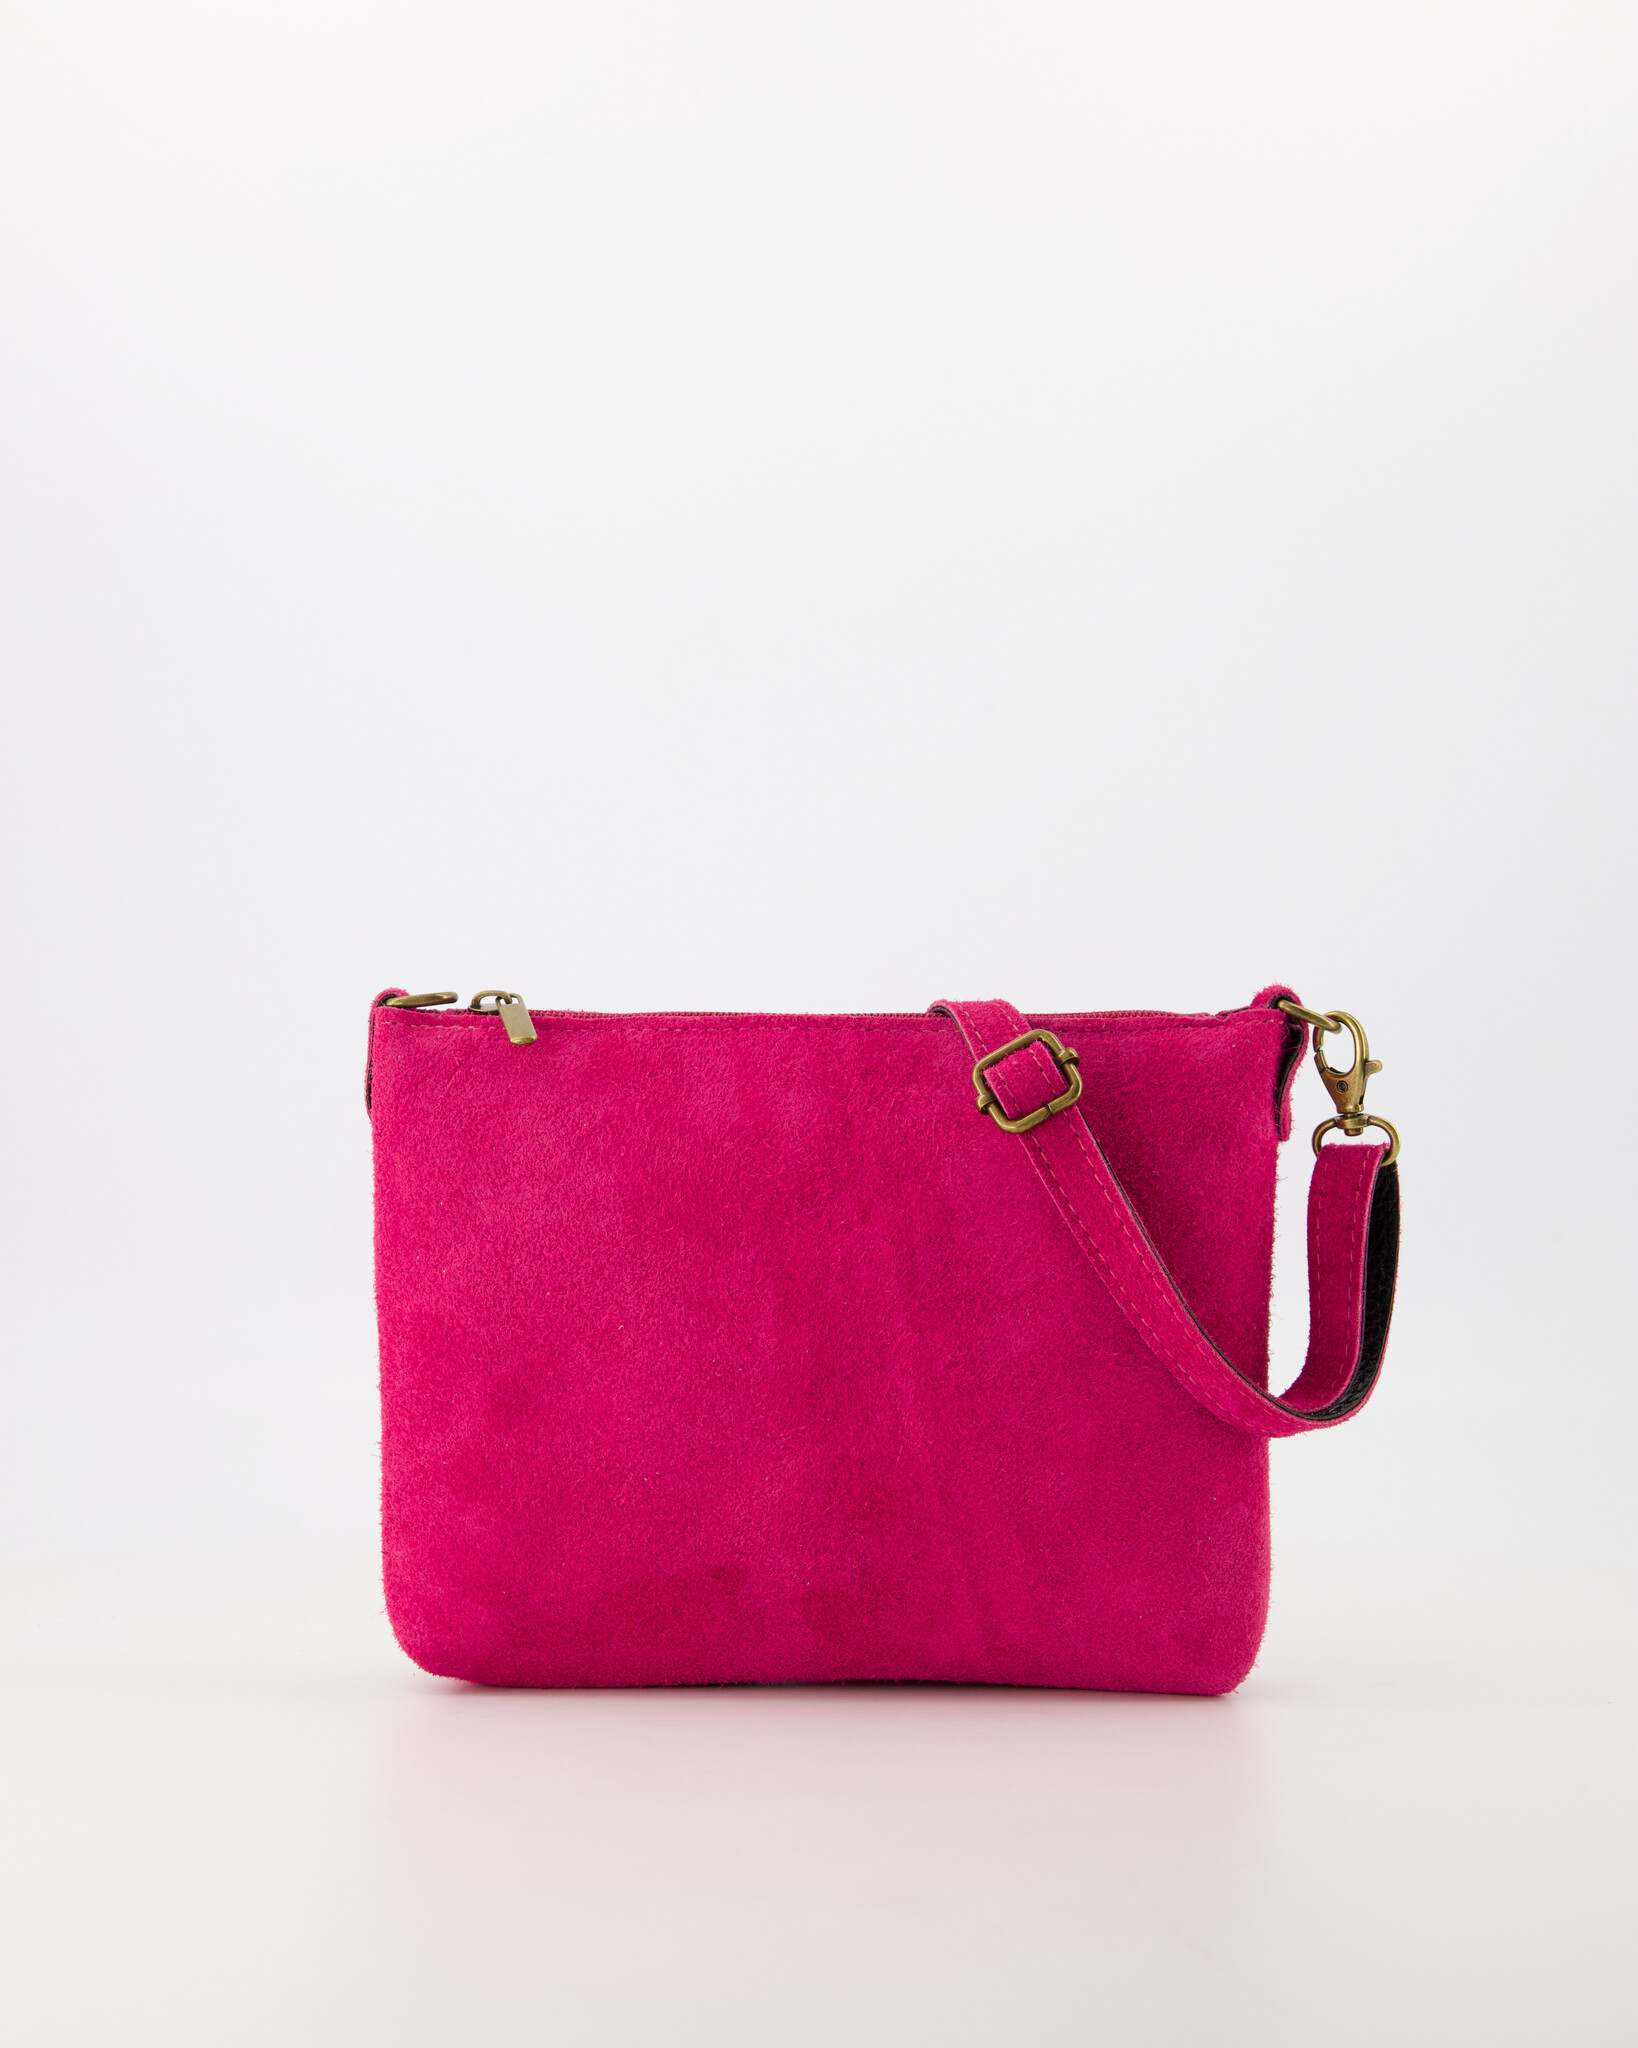 Pink suede purse | Maya ot Raya's shop